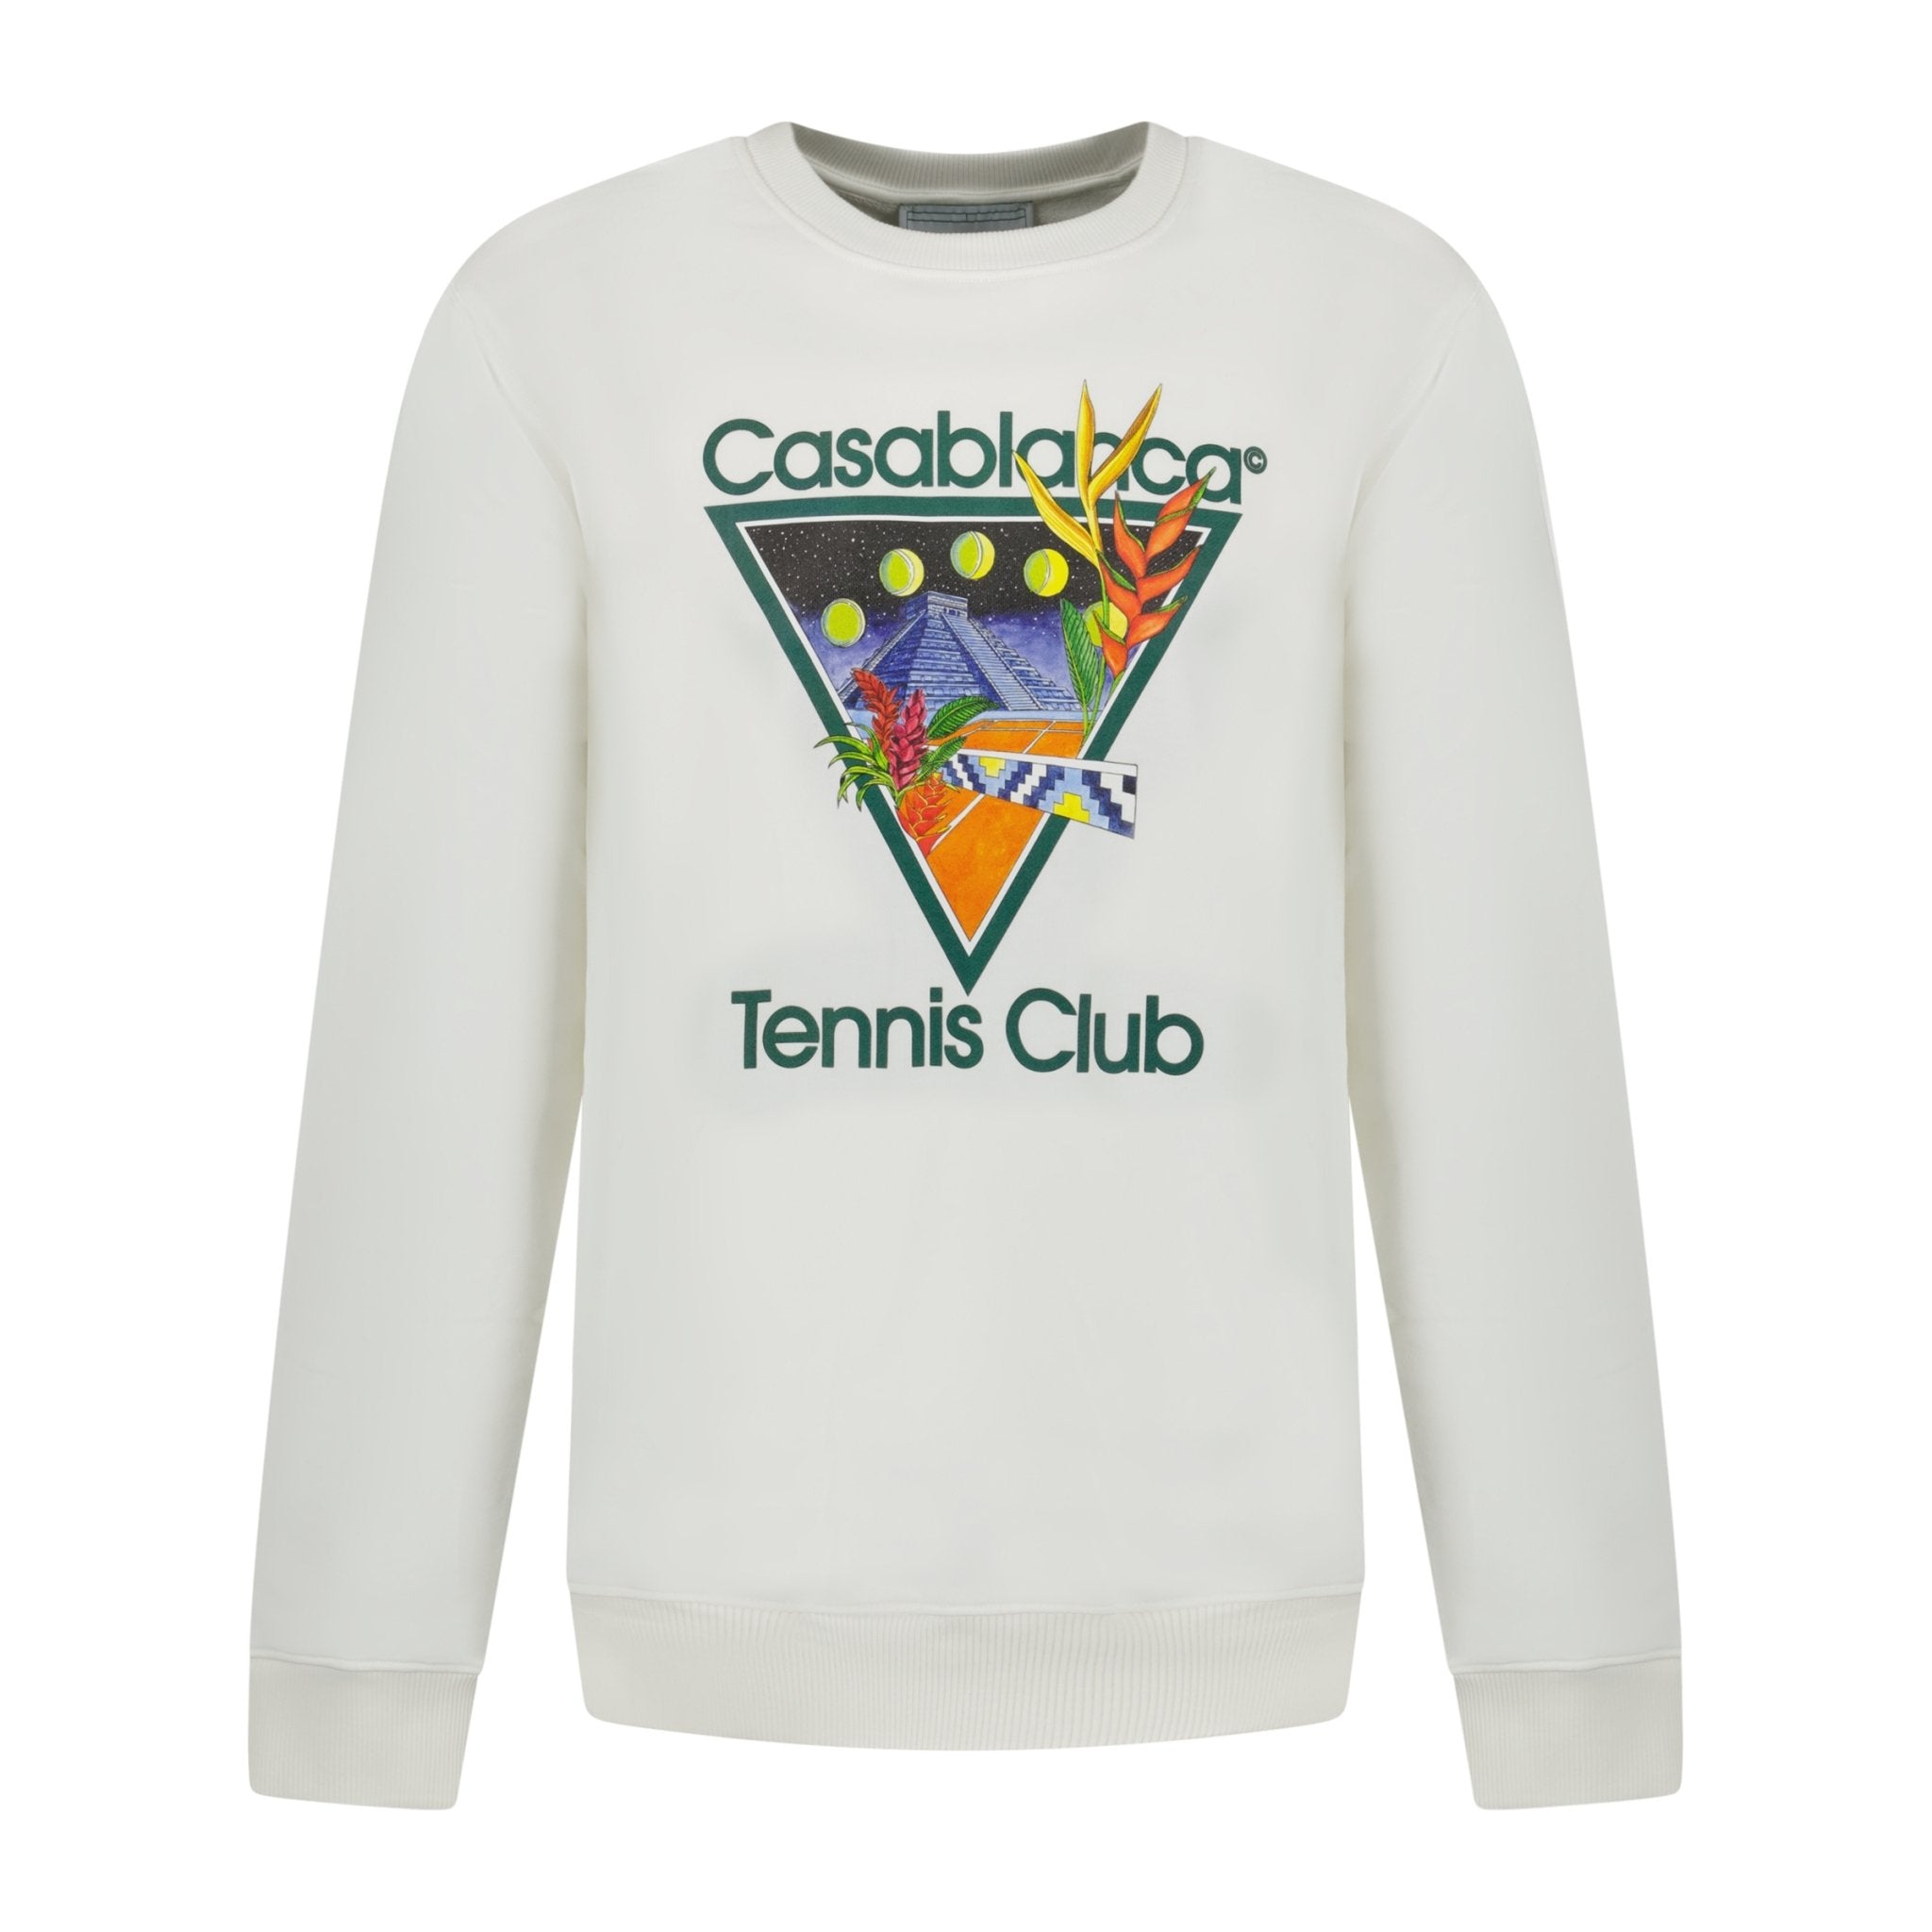 Casablanca 'Tennis Club' Sweatshirt White